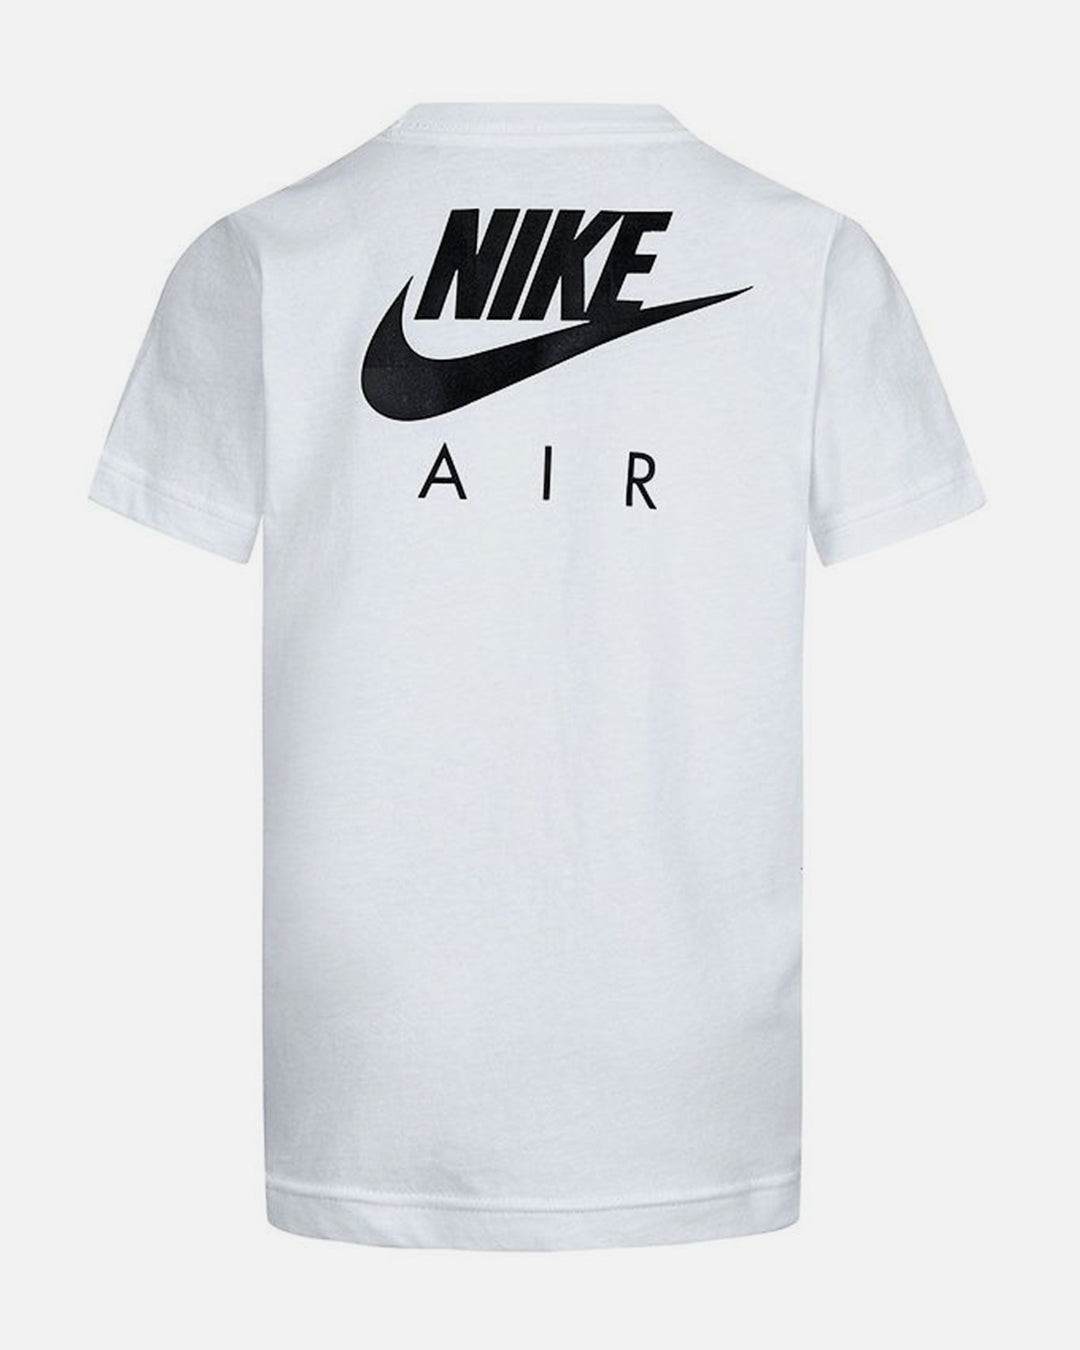 Nike Air Kids T-Shirt - White